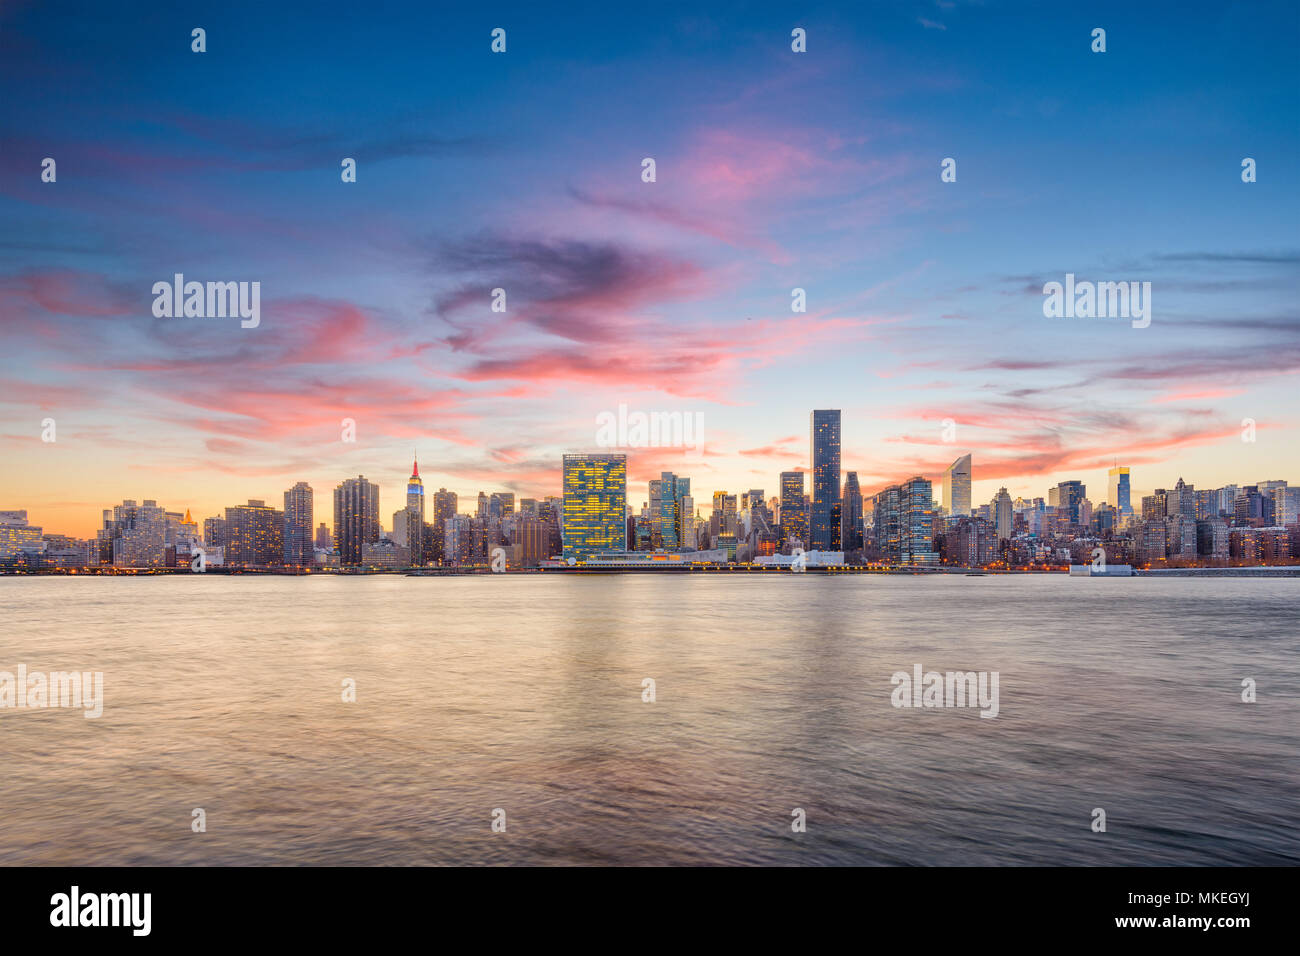 New York, New York, USA city skyline from across the East River at dusk. Stock Photo